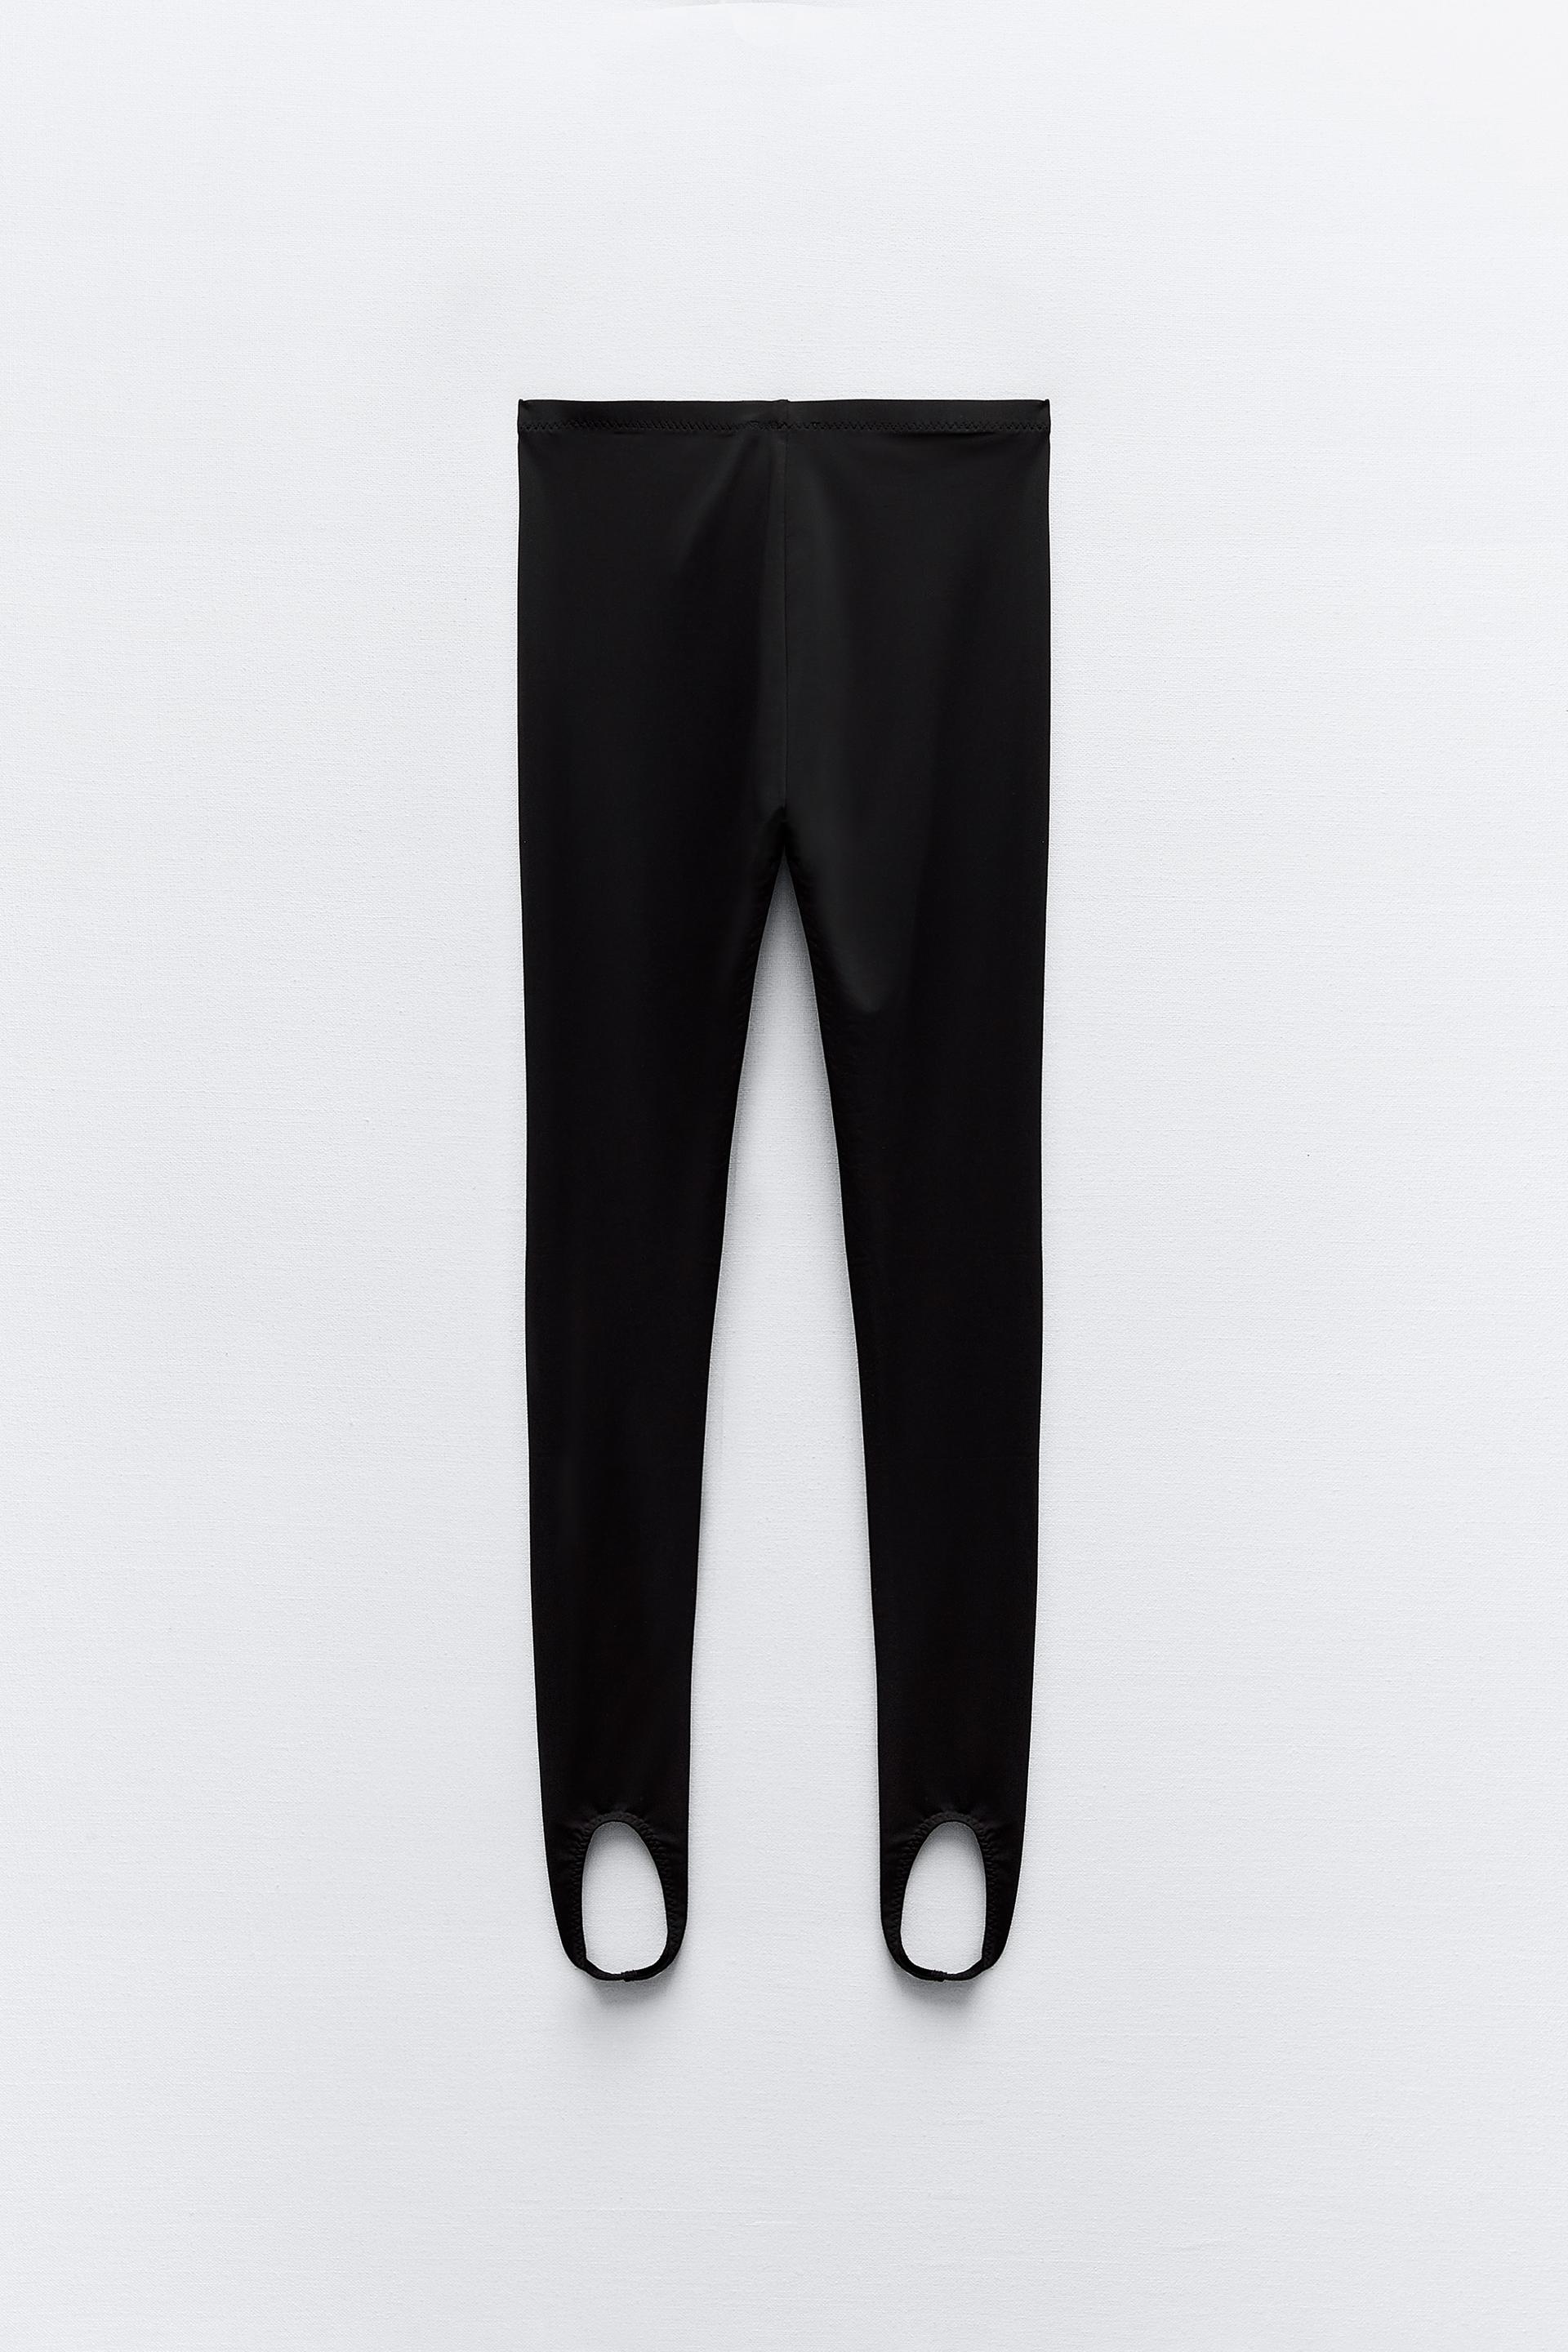 Zara Black and White Zip Up Leggings - Size XXL